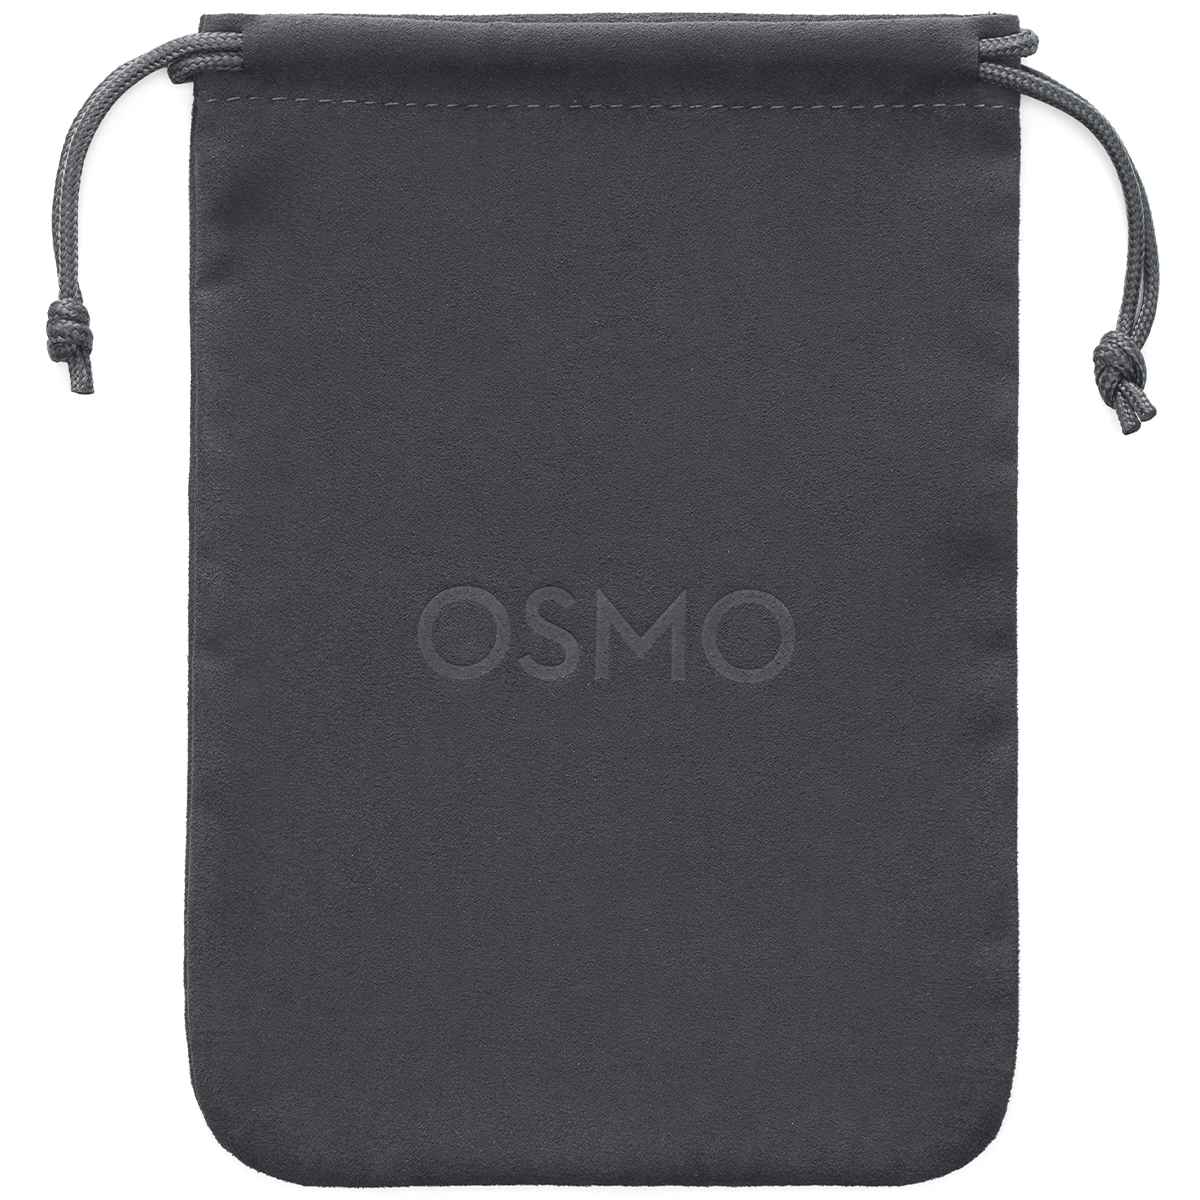 DJI Osmo Mobile 6 - Foto Leistenschneider